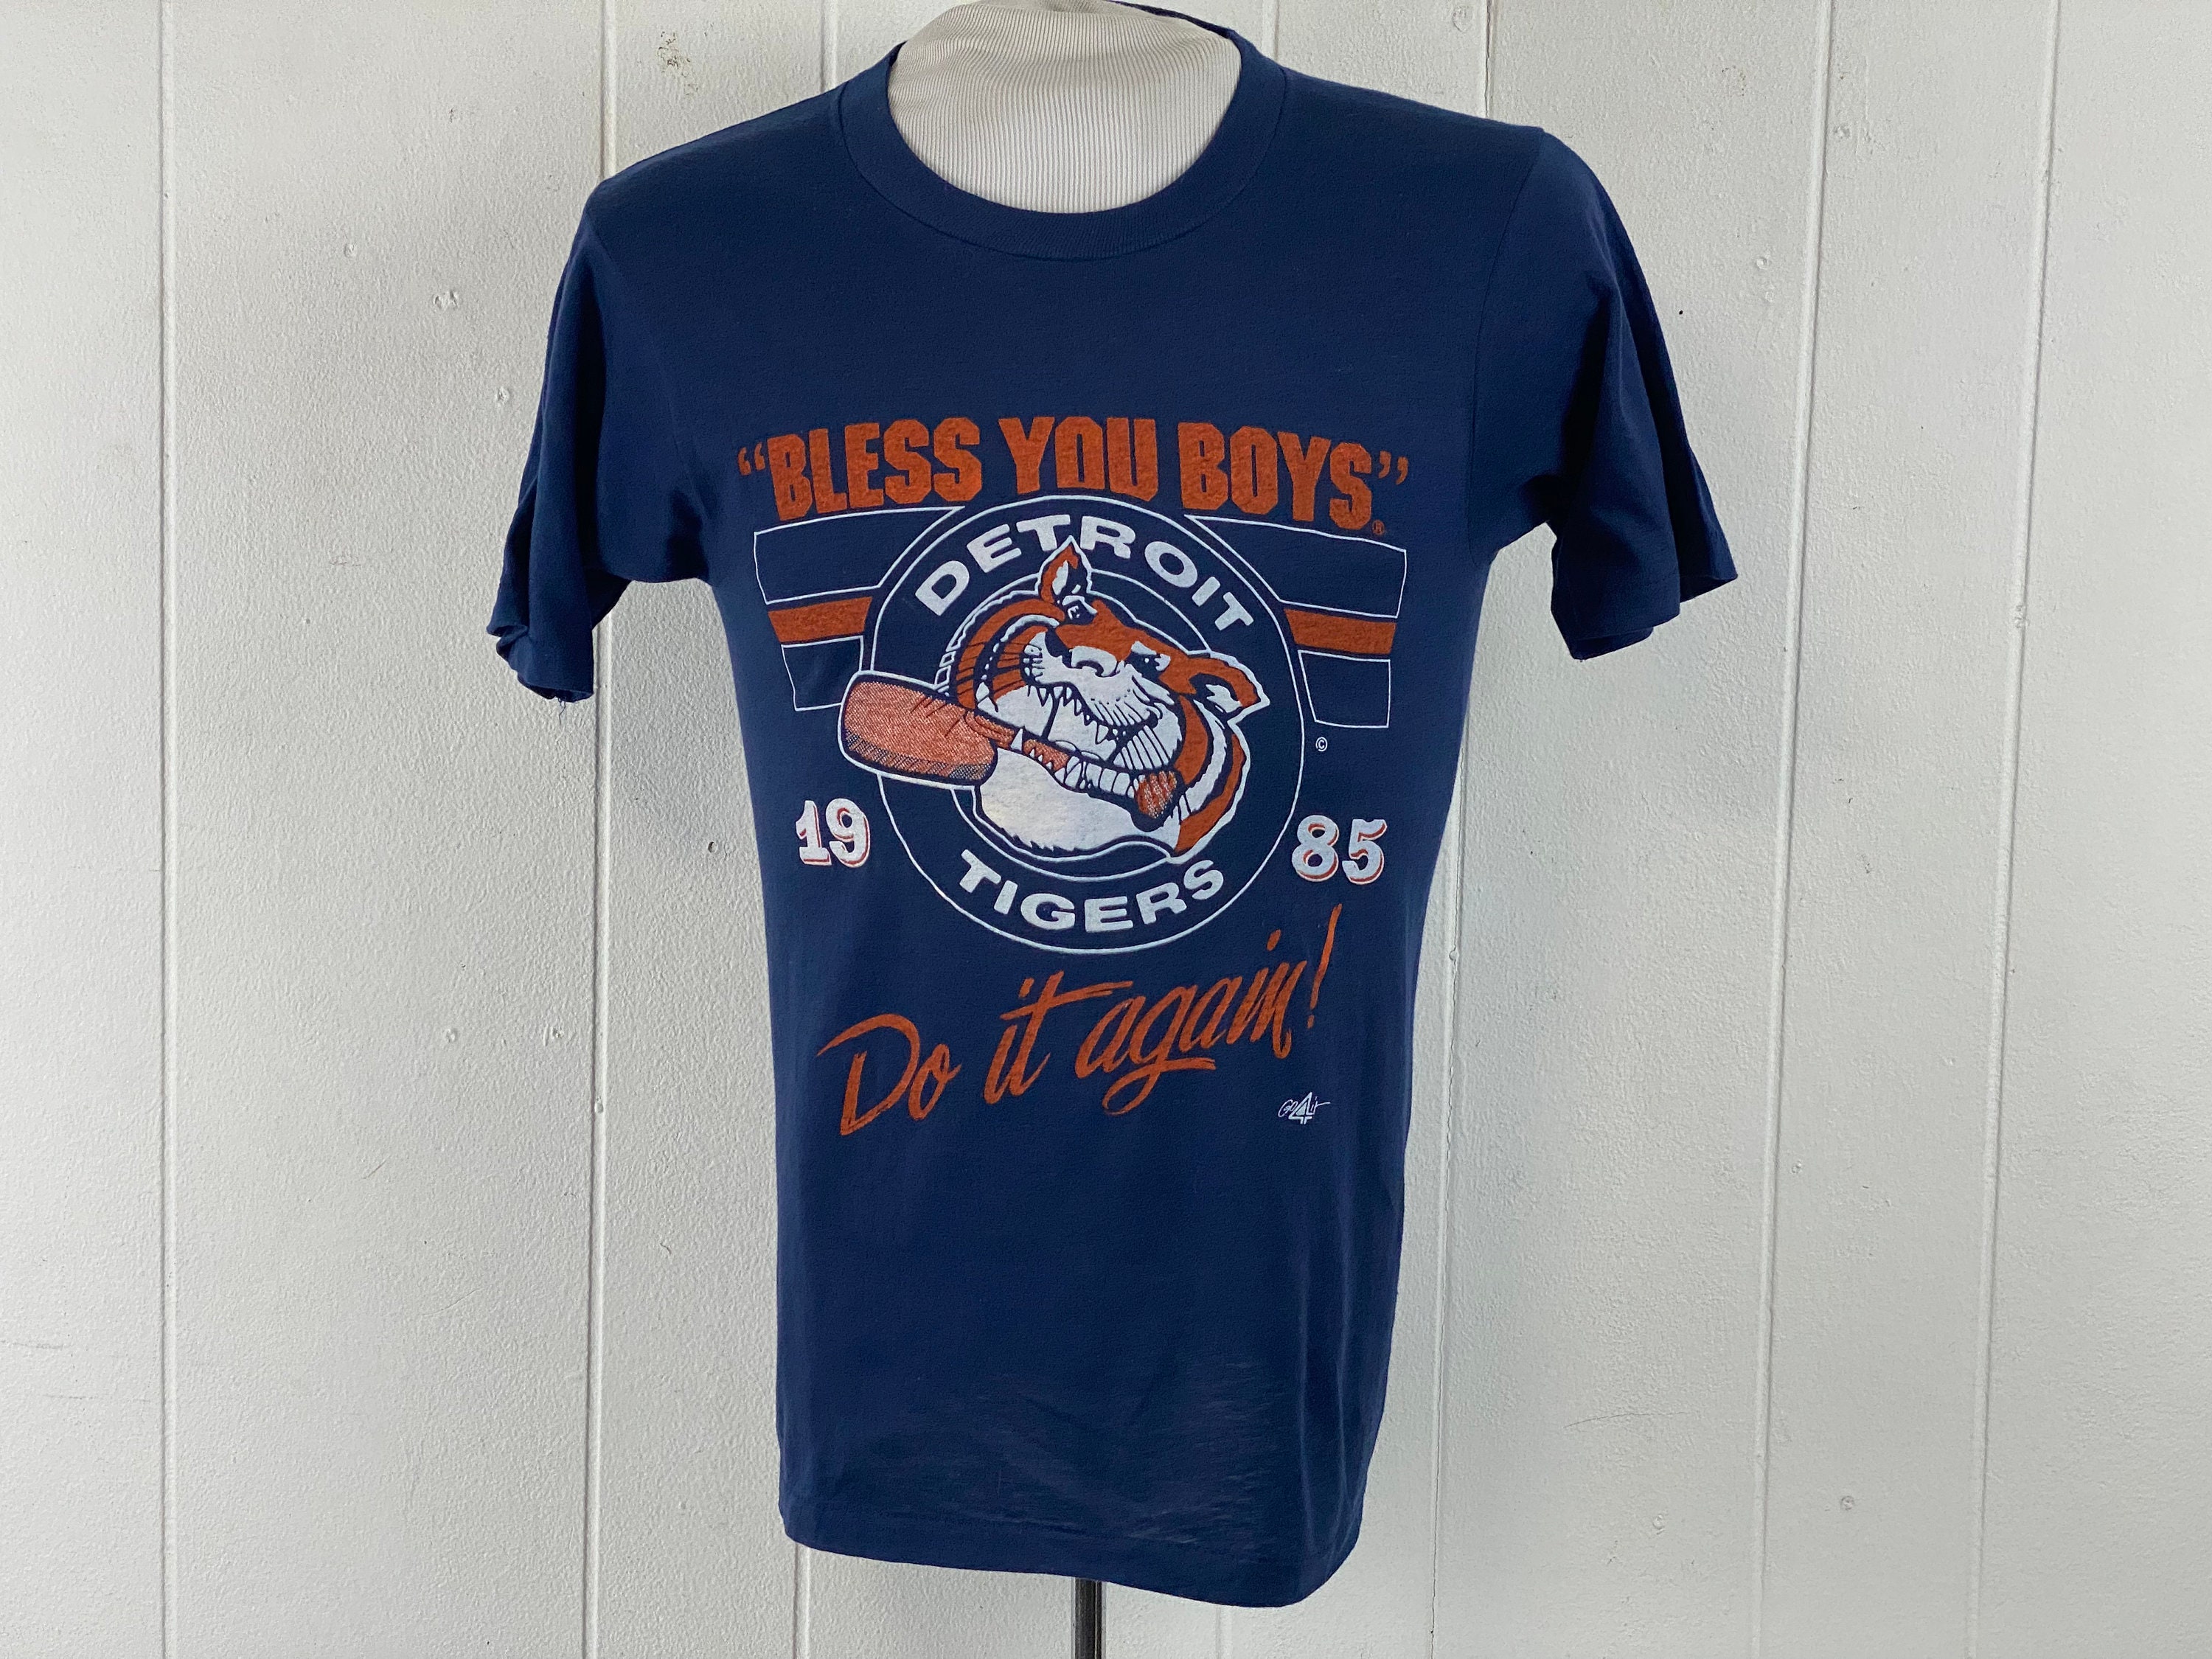 Bless You Boys, a Detroit Tigers community